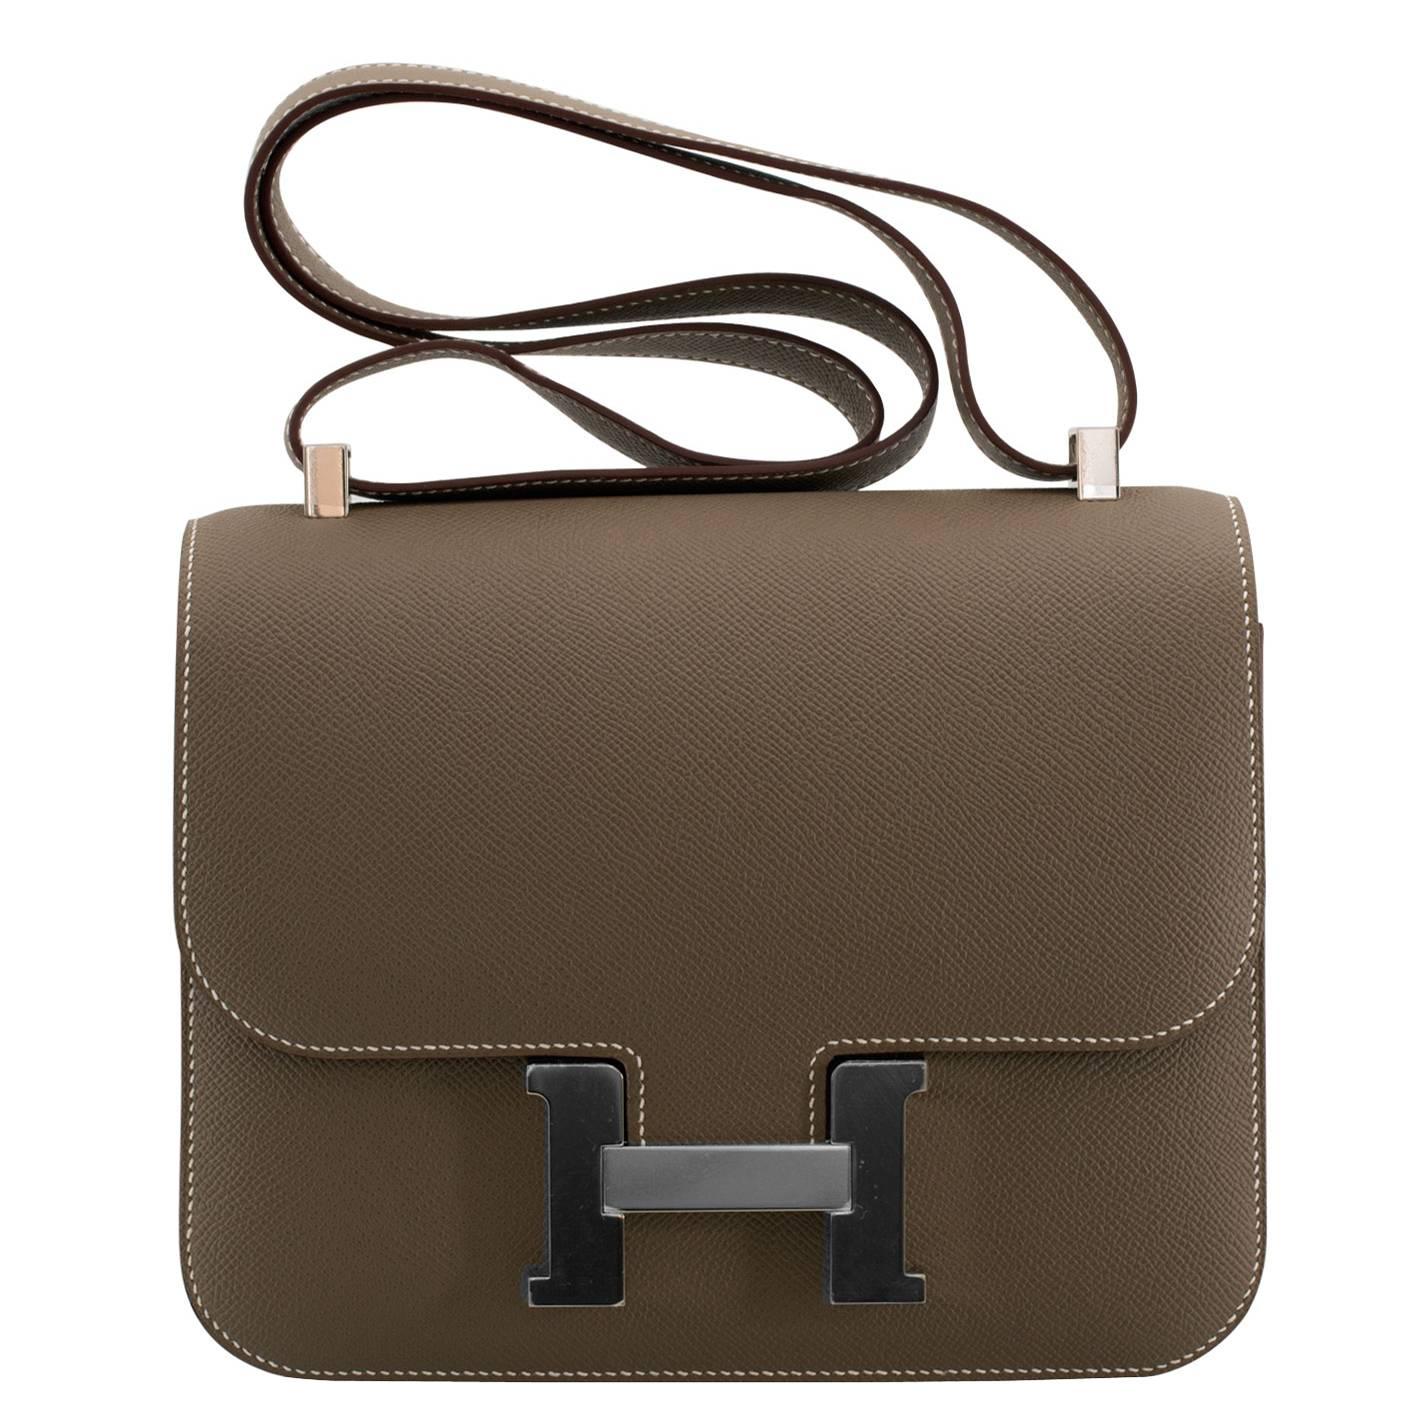 Hermes Handbag CONSTANCE III 24cm Epsom Leather 18 Etoupe Color PHW 2016